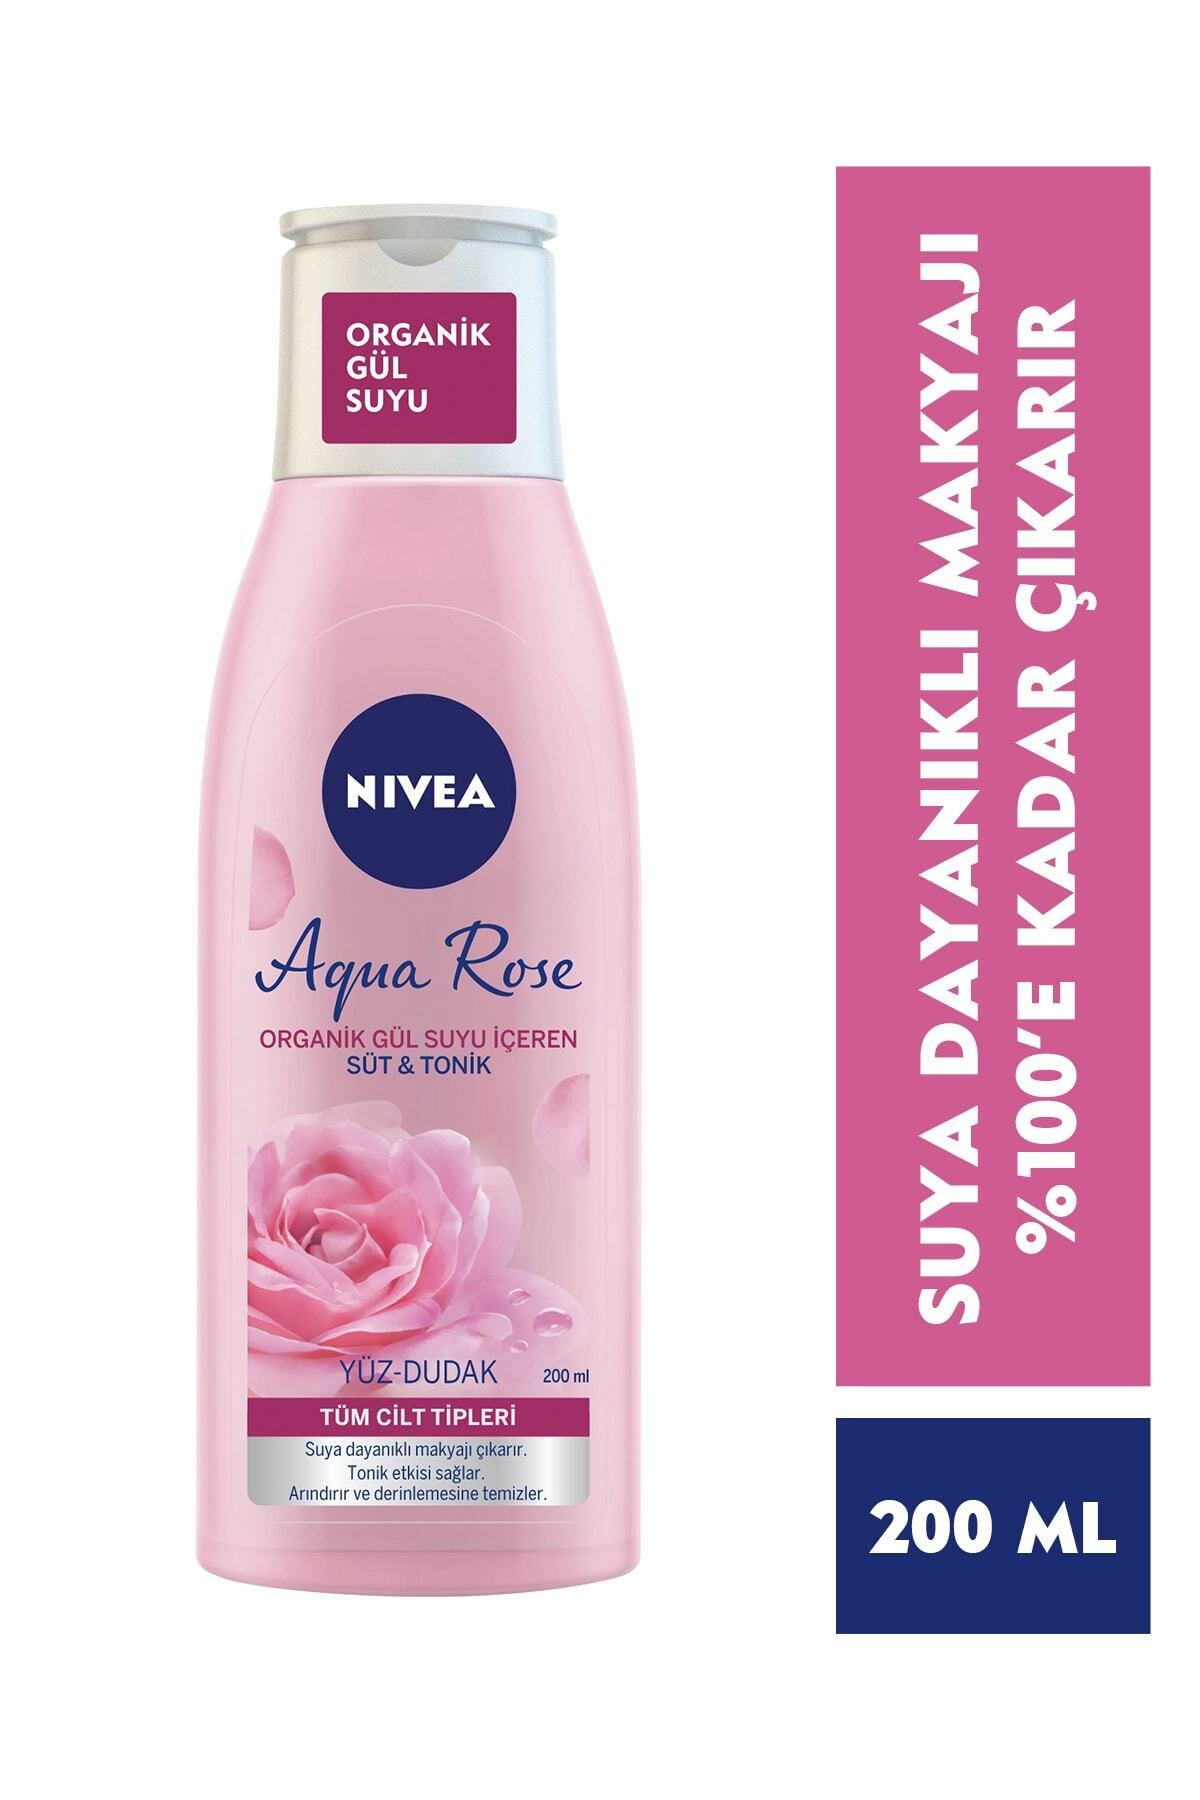 NIVEA آب گل رز آلی رز با شیر و تونیک 200 میلی لیتر پاک کننده موثر آرایش